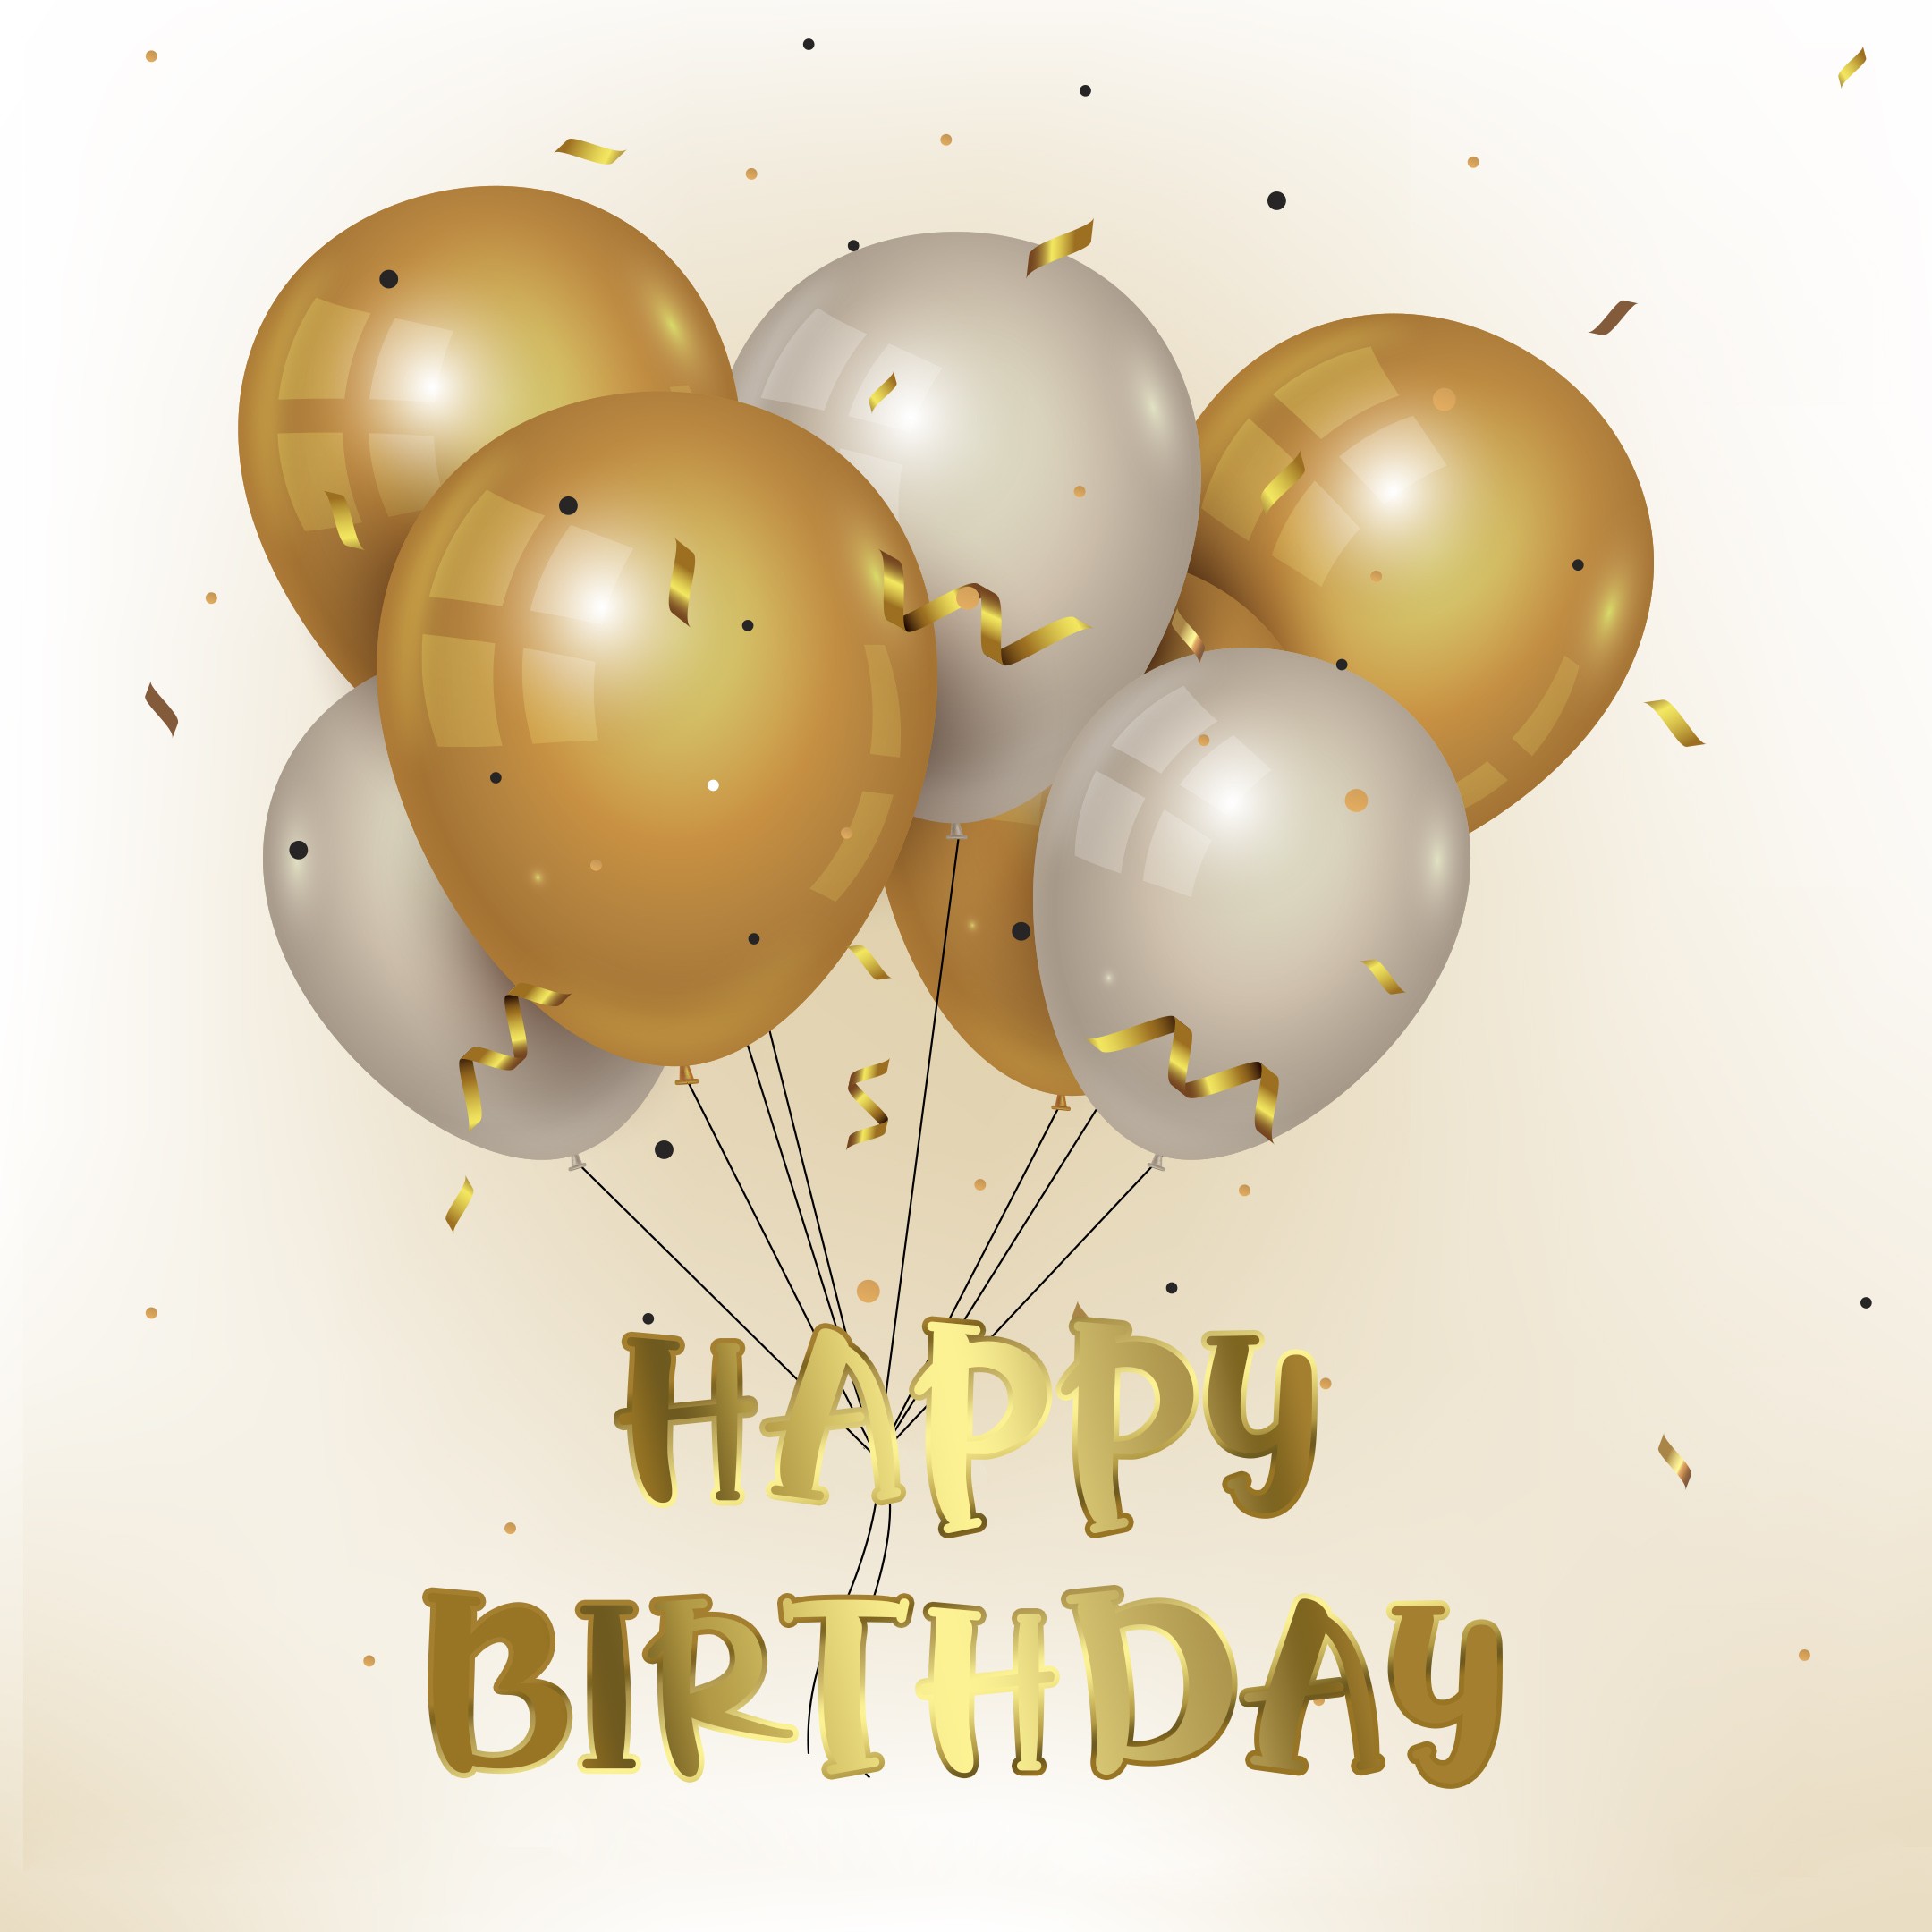 Free Happy Birthday Image With Balloons - birthdayimg.com